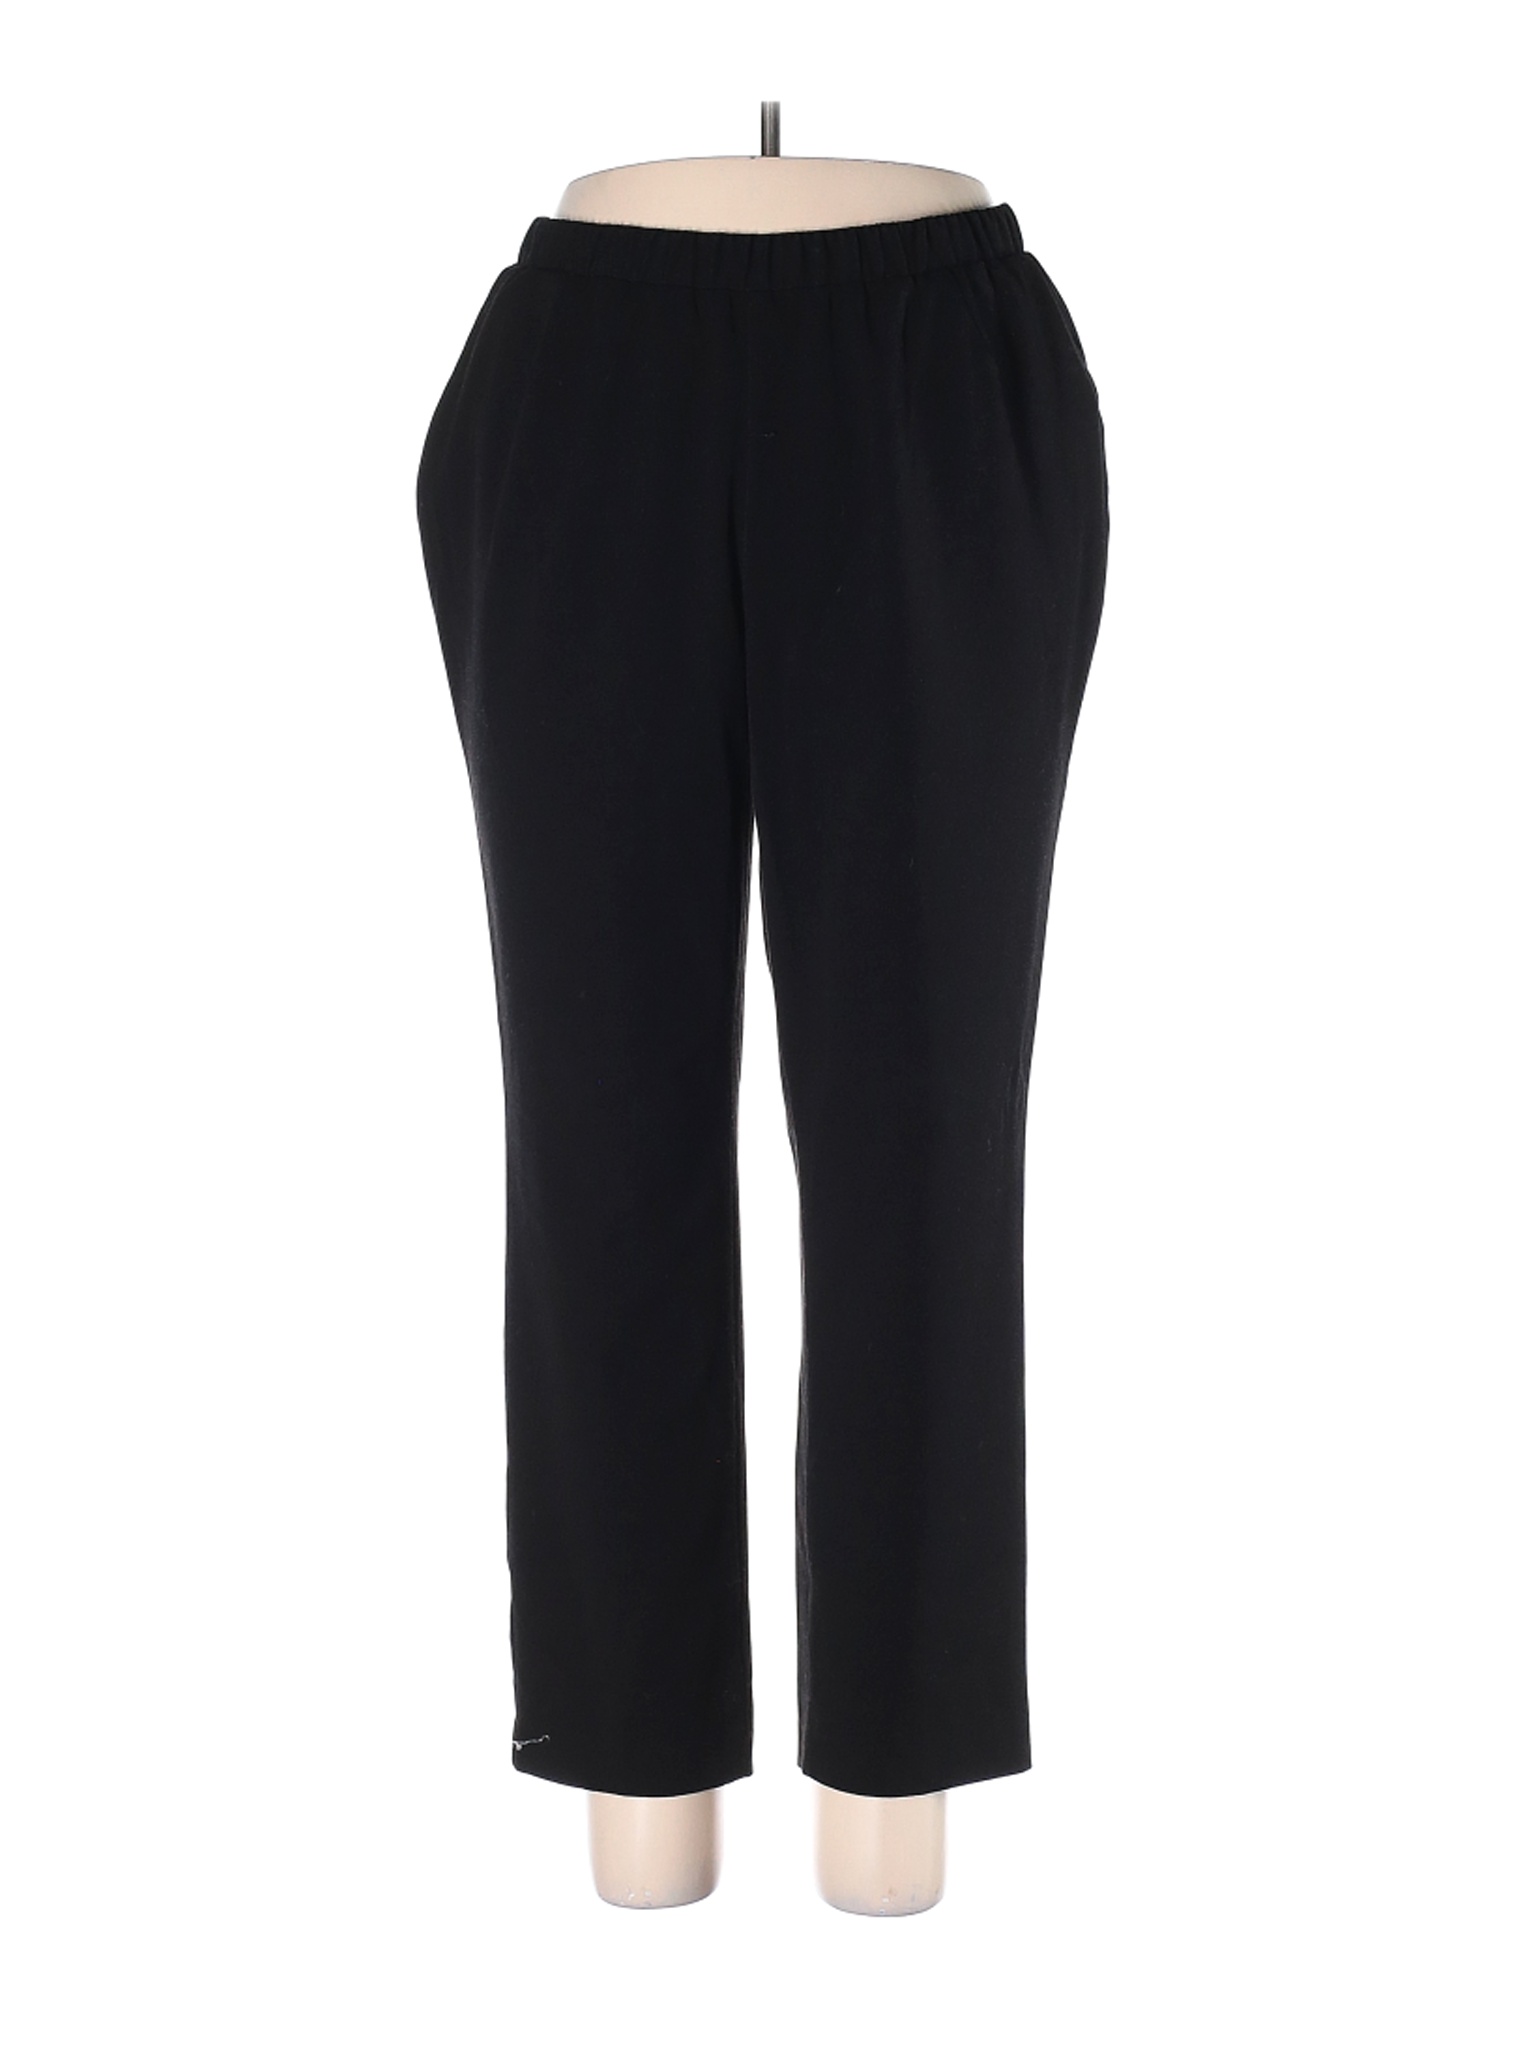 Allison Daley Women Black Casual Pants 16 | eBay